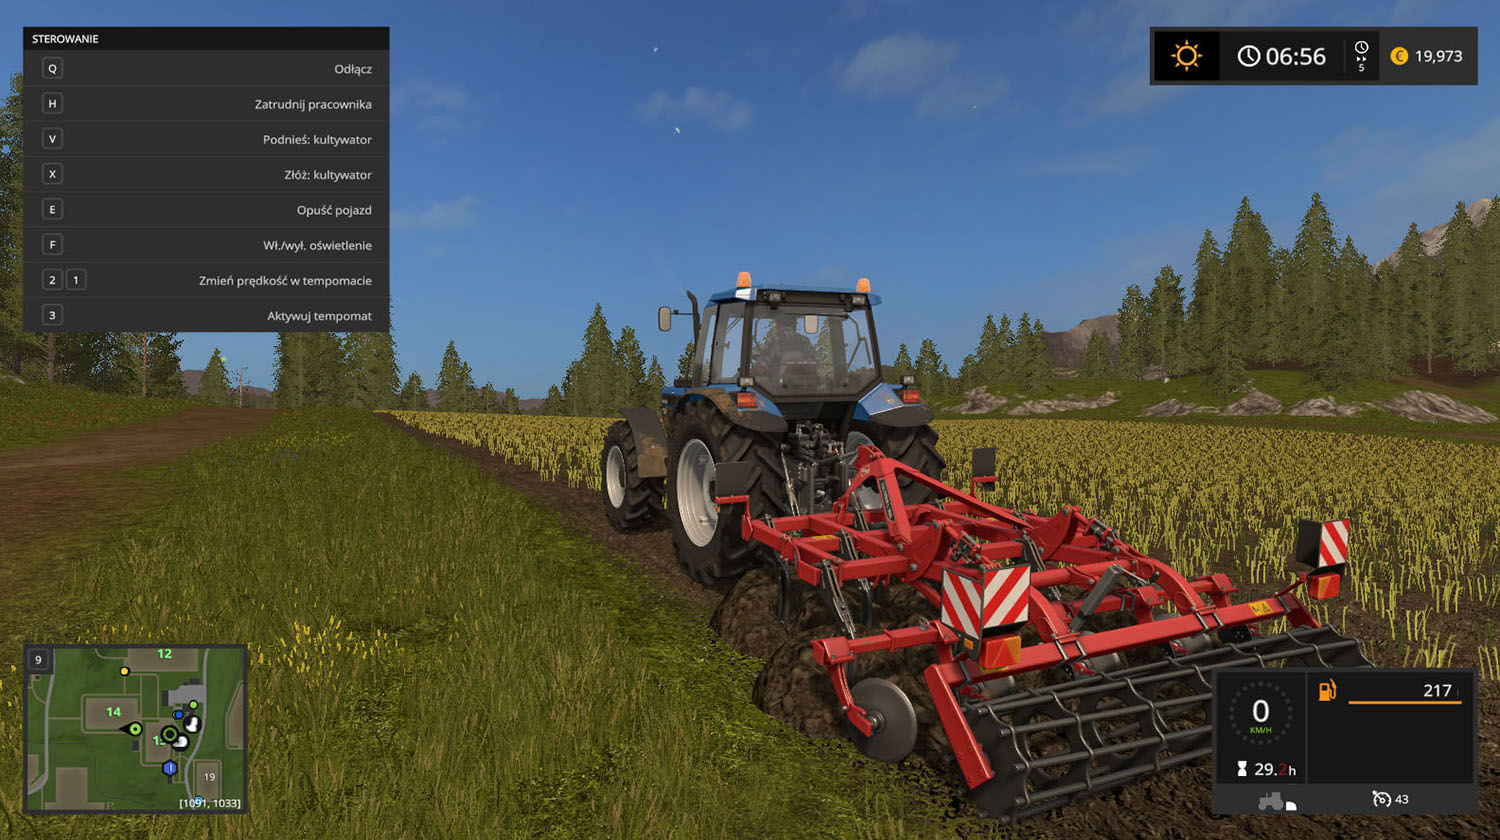 farming simulator 17 pc